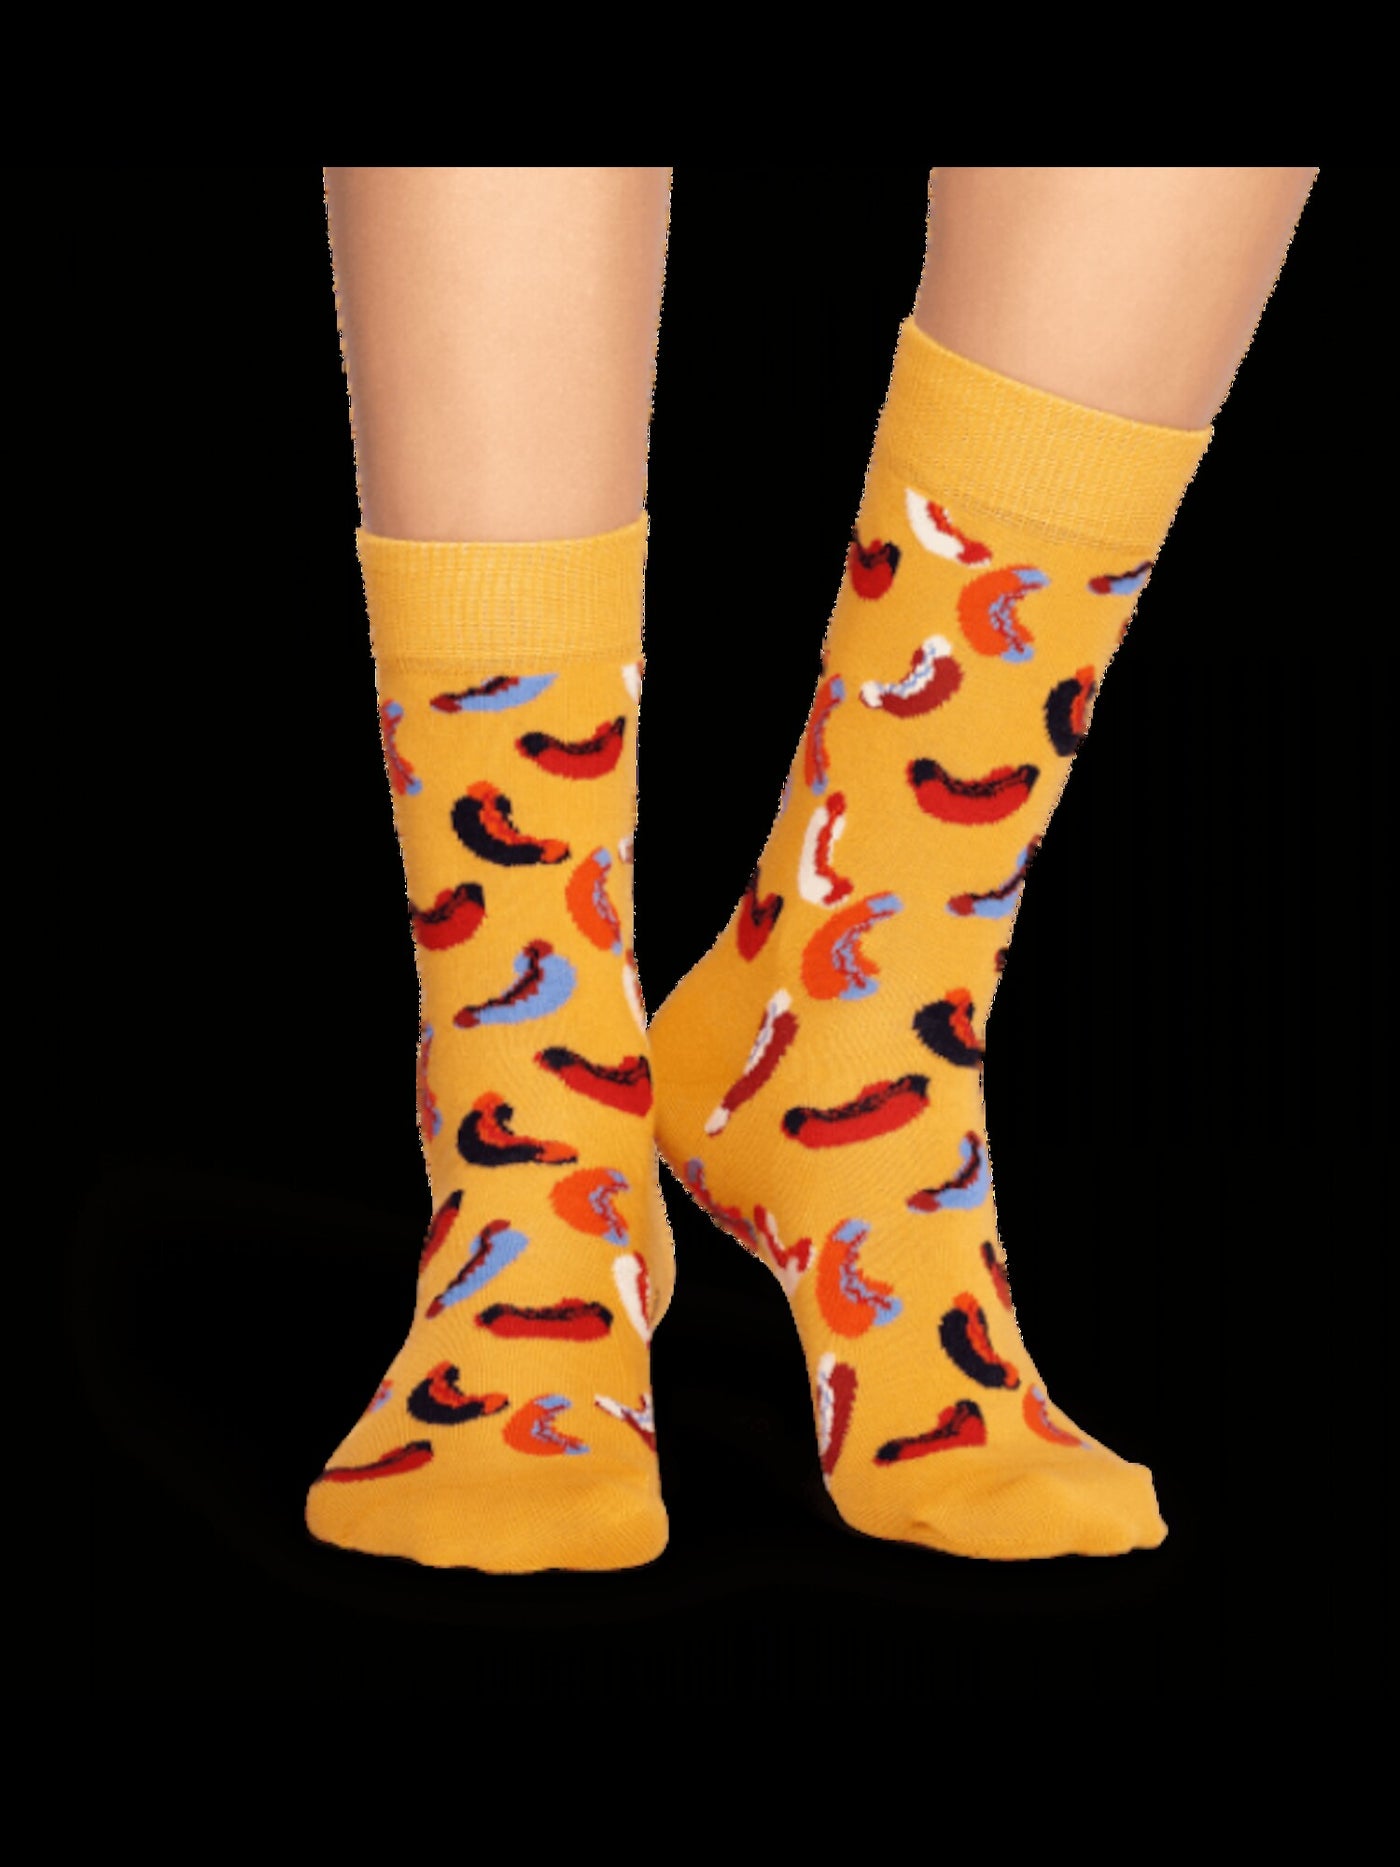 HAPPY SOCKS Womens Orange Printed Casual Crew Socks 10-13